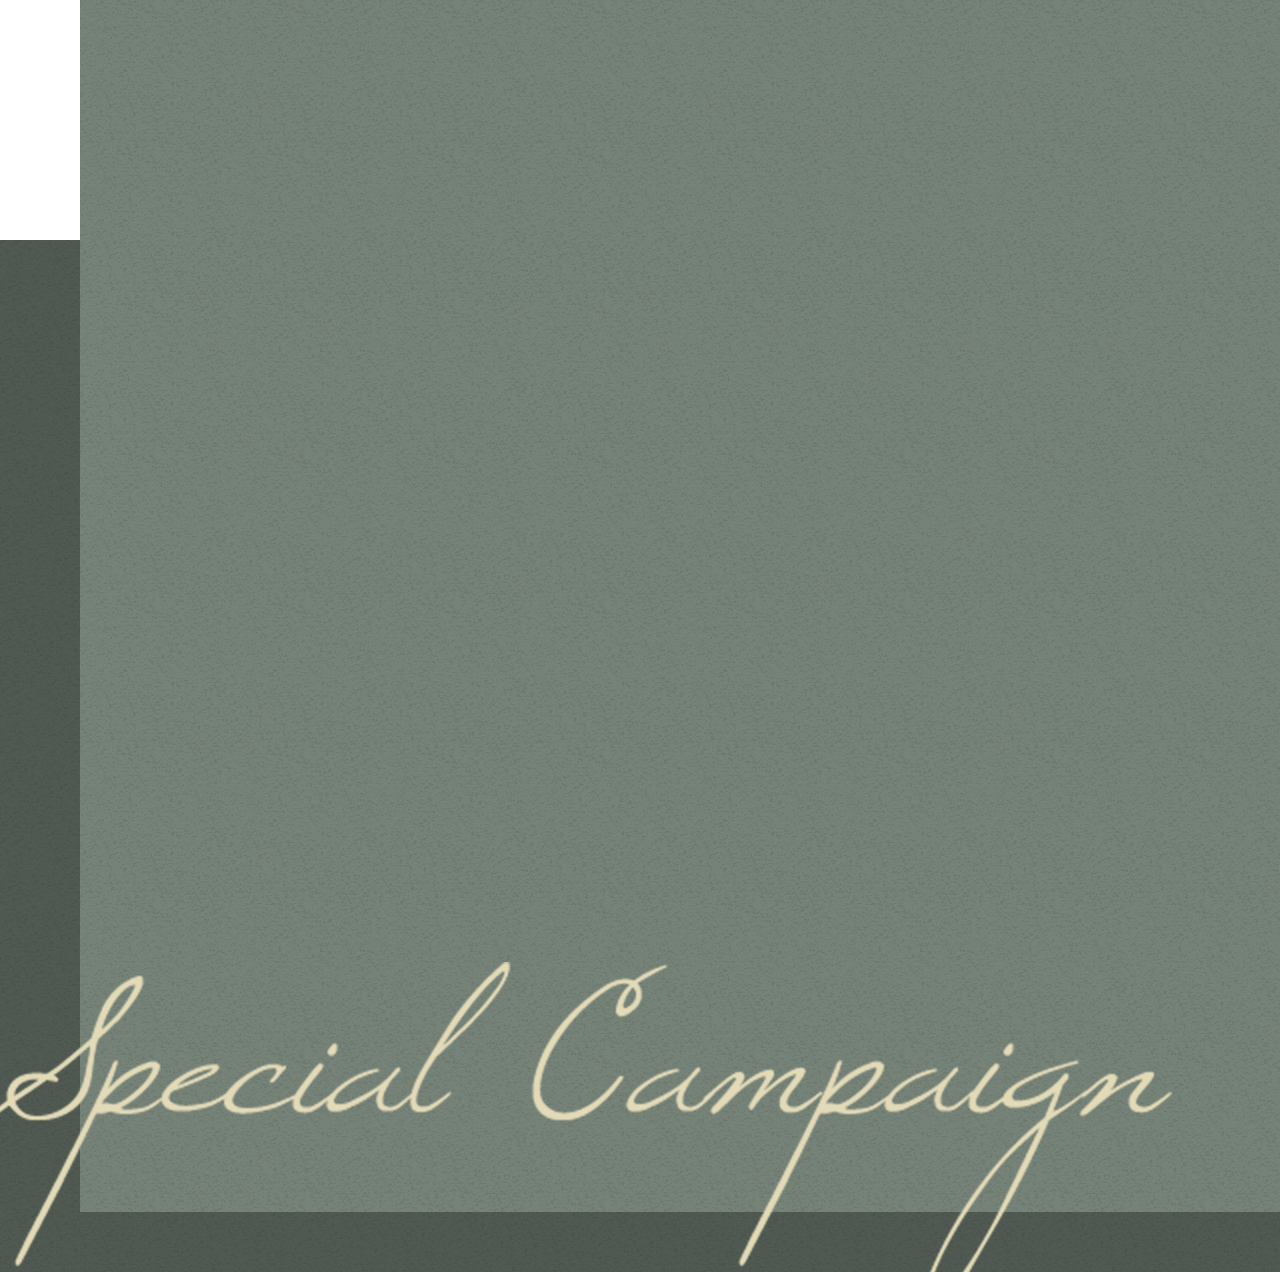 Special Campaign